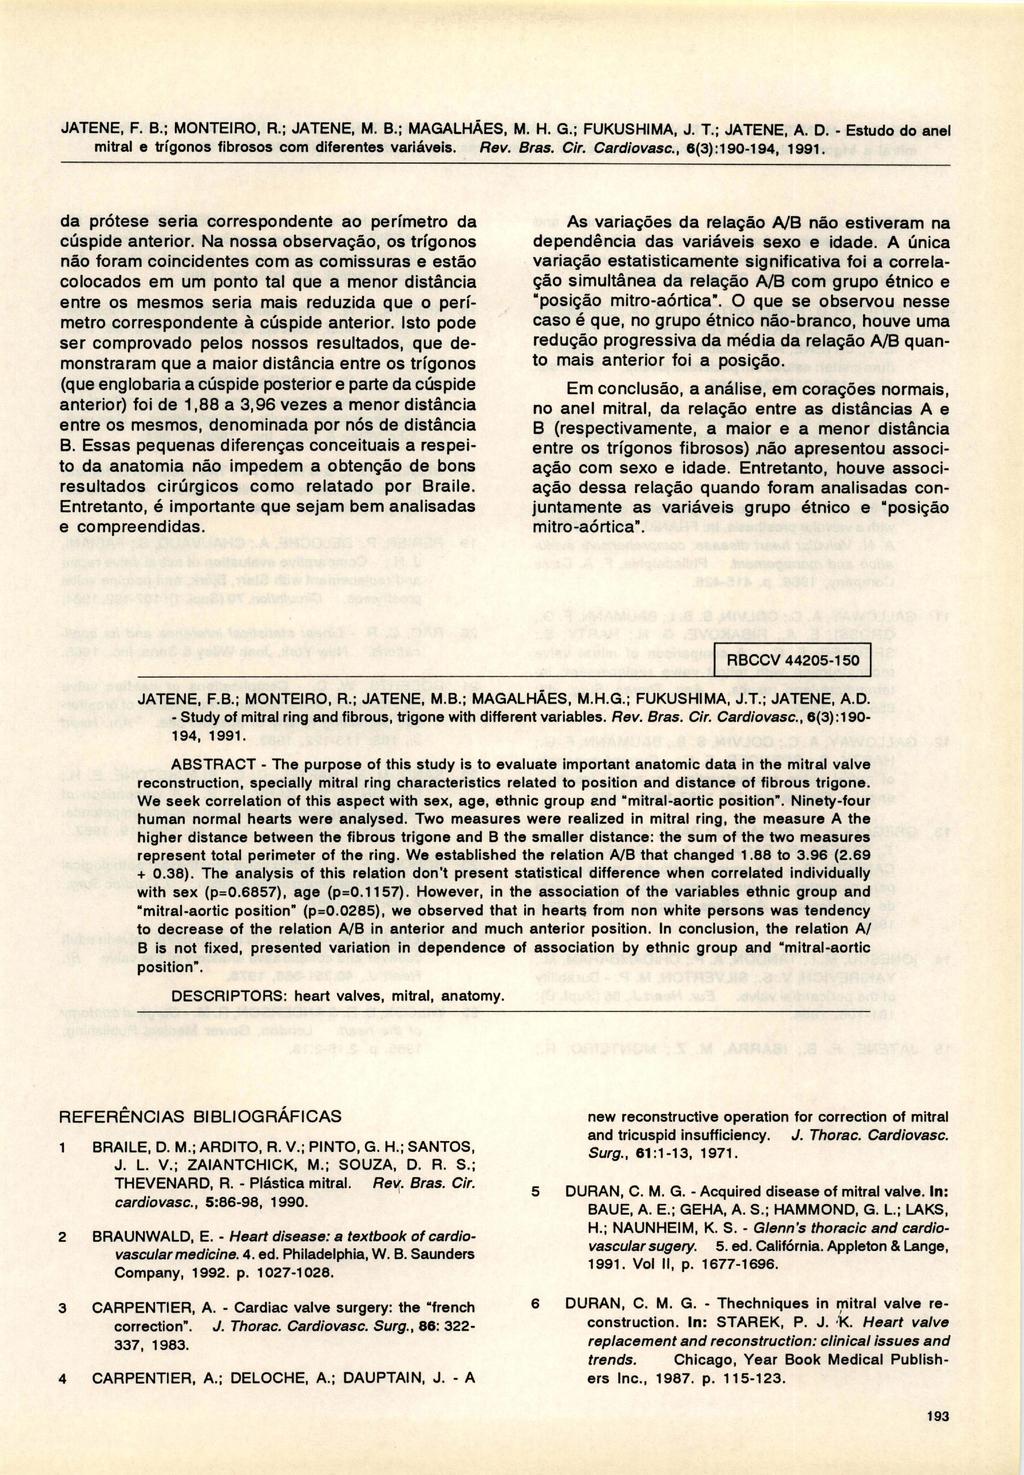 JATENE, F. B.; MONTEIRO, R.; JATENE, M. B.; MAGALHÃES, M. H. G.; FUKUSHIMA, J. T.; JATENE, A. D. - Estudo do anel Rev. Bras. Cir. Cardiovasc., 6(3):190-194, 1991.